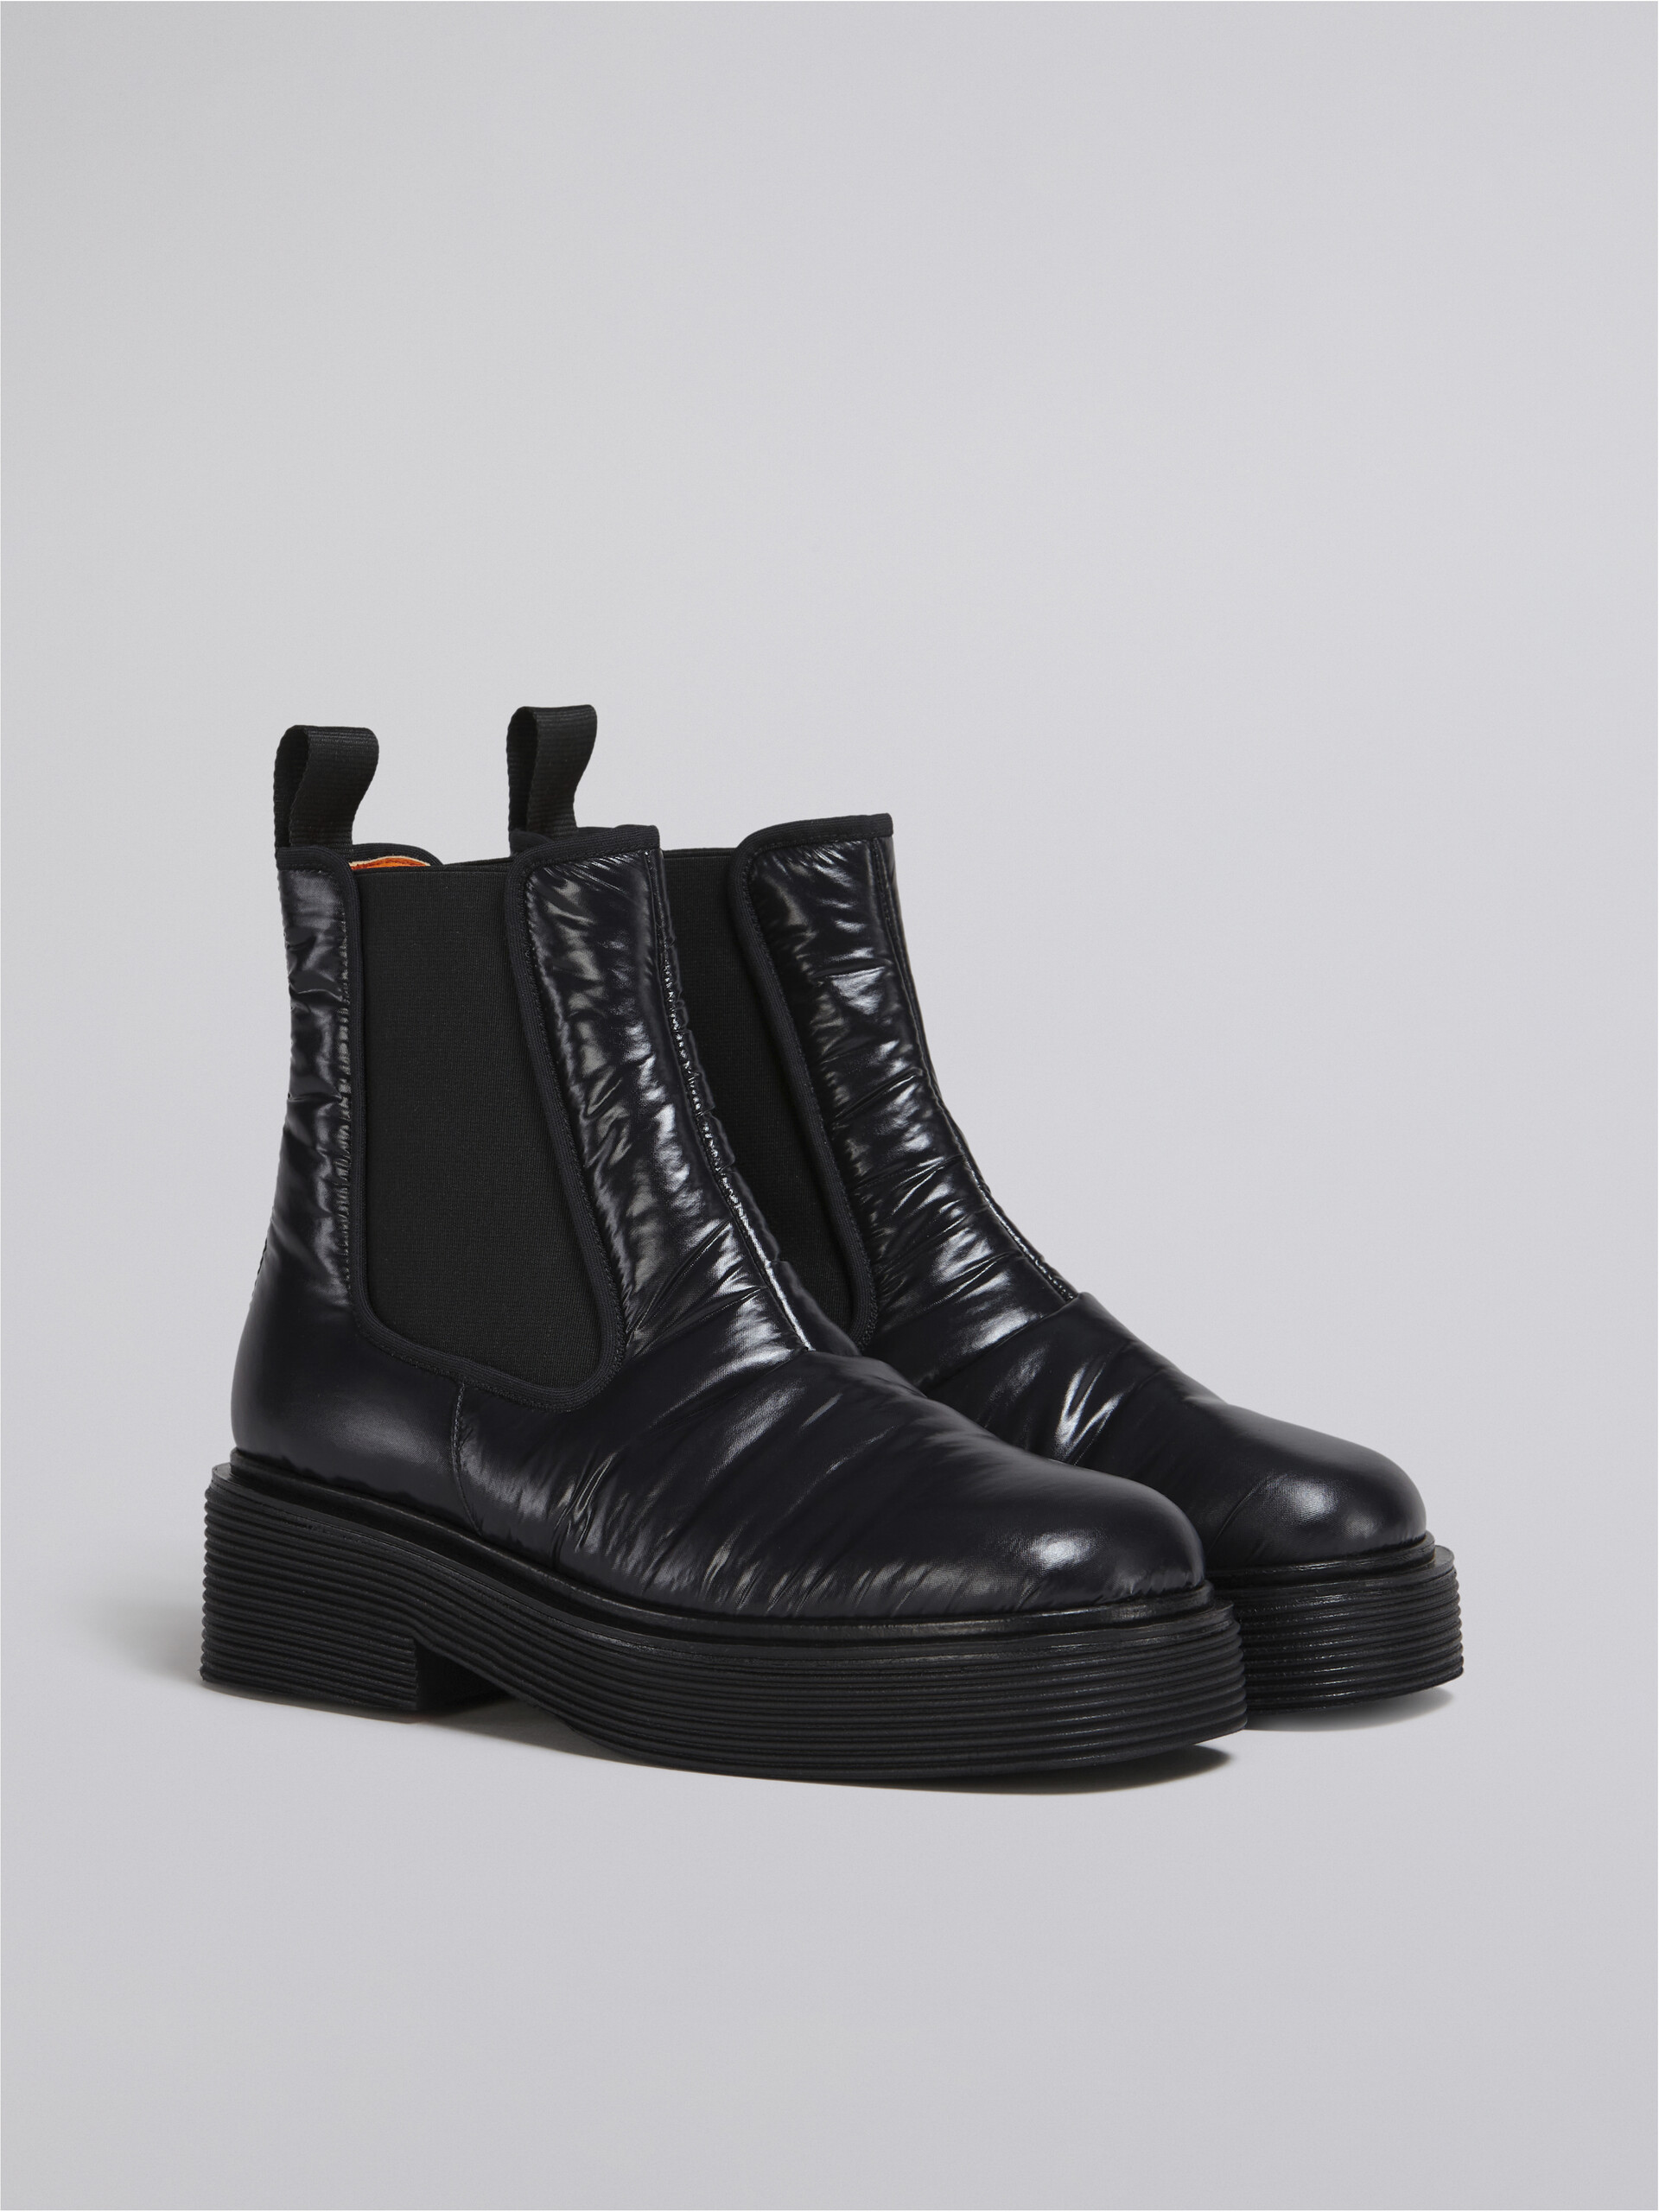 Nylon Chelsea boot - Boots - Image 2